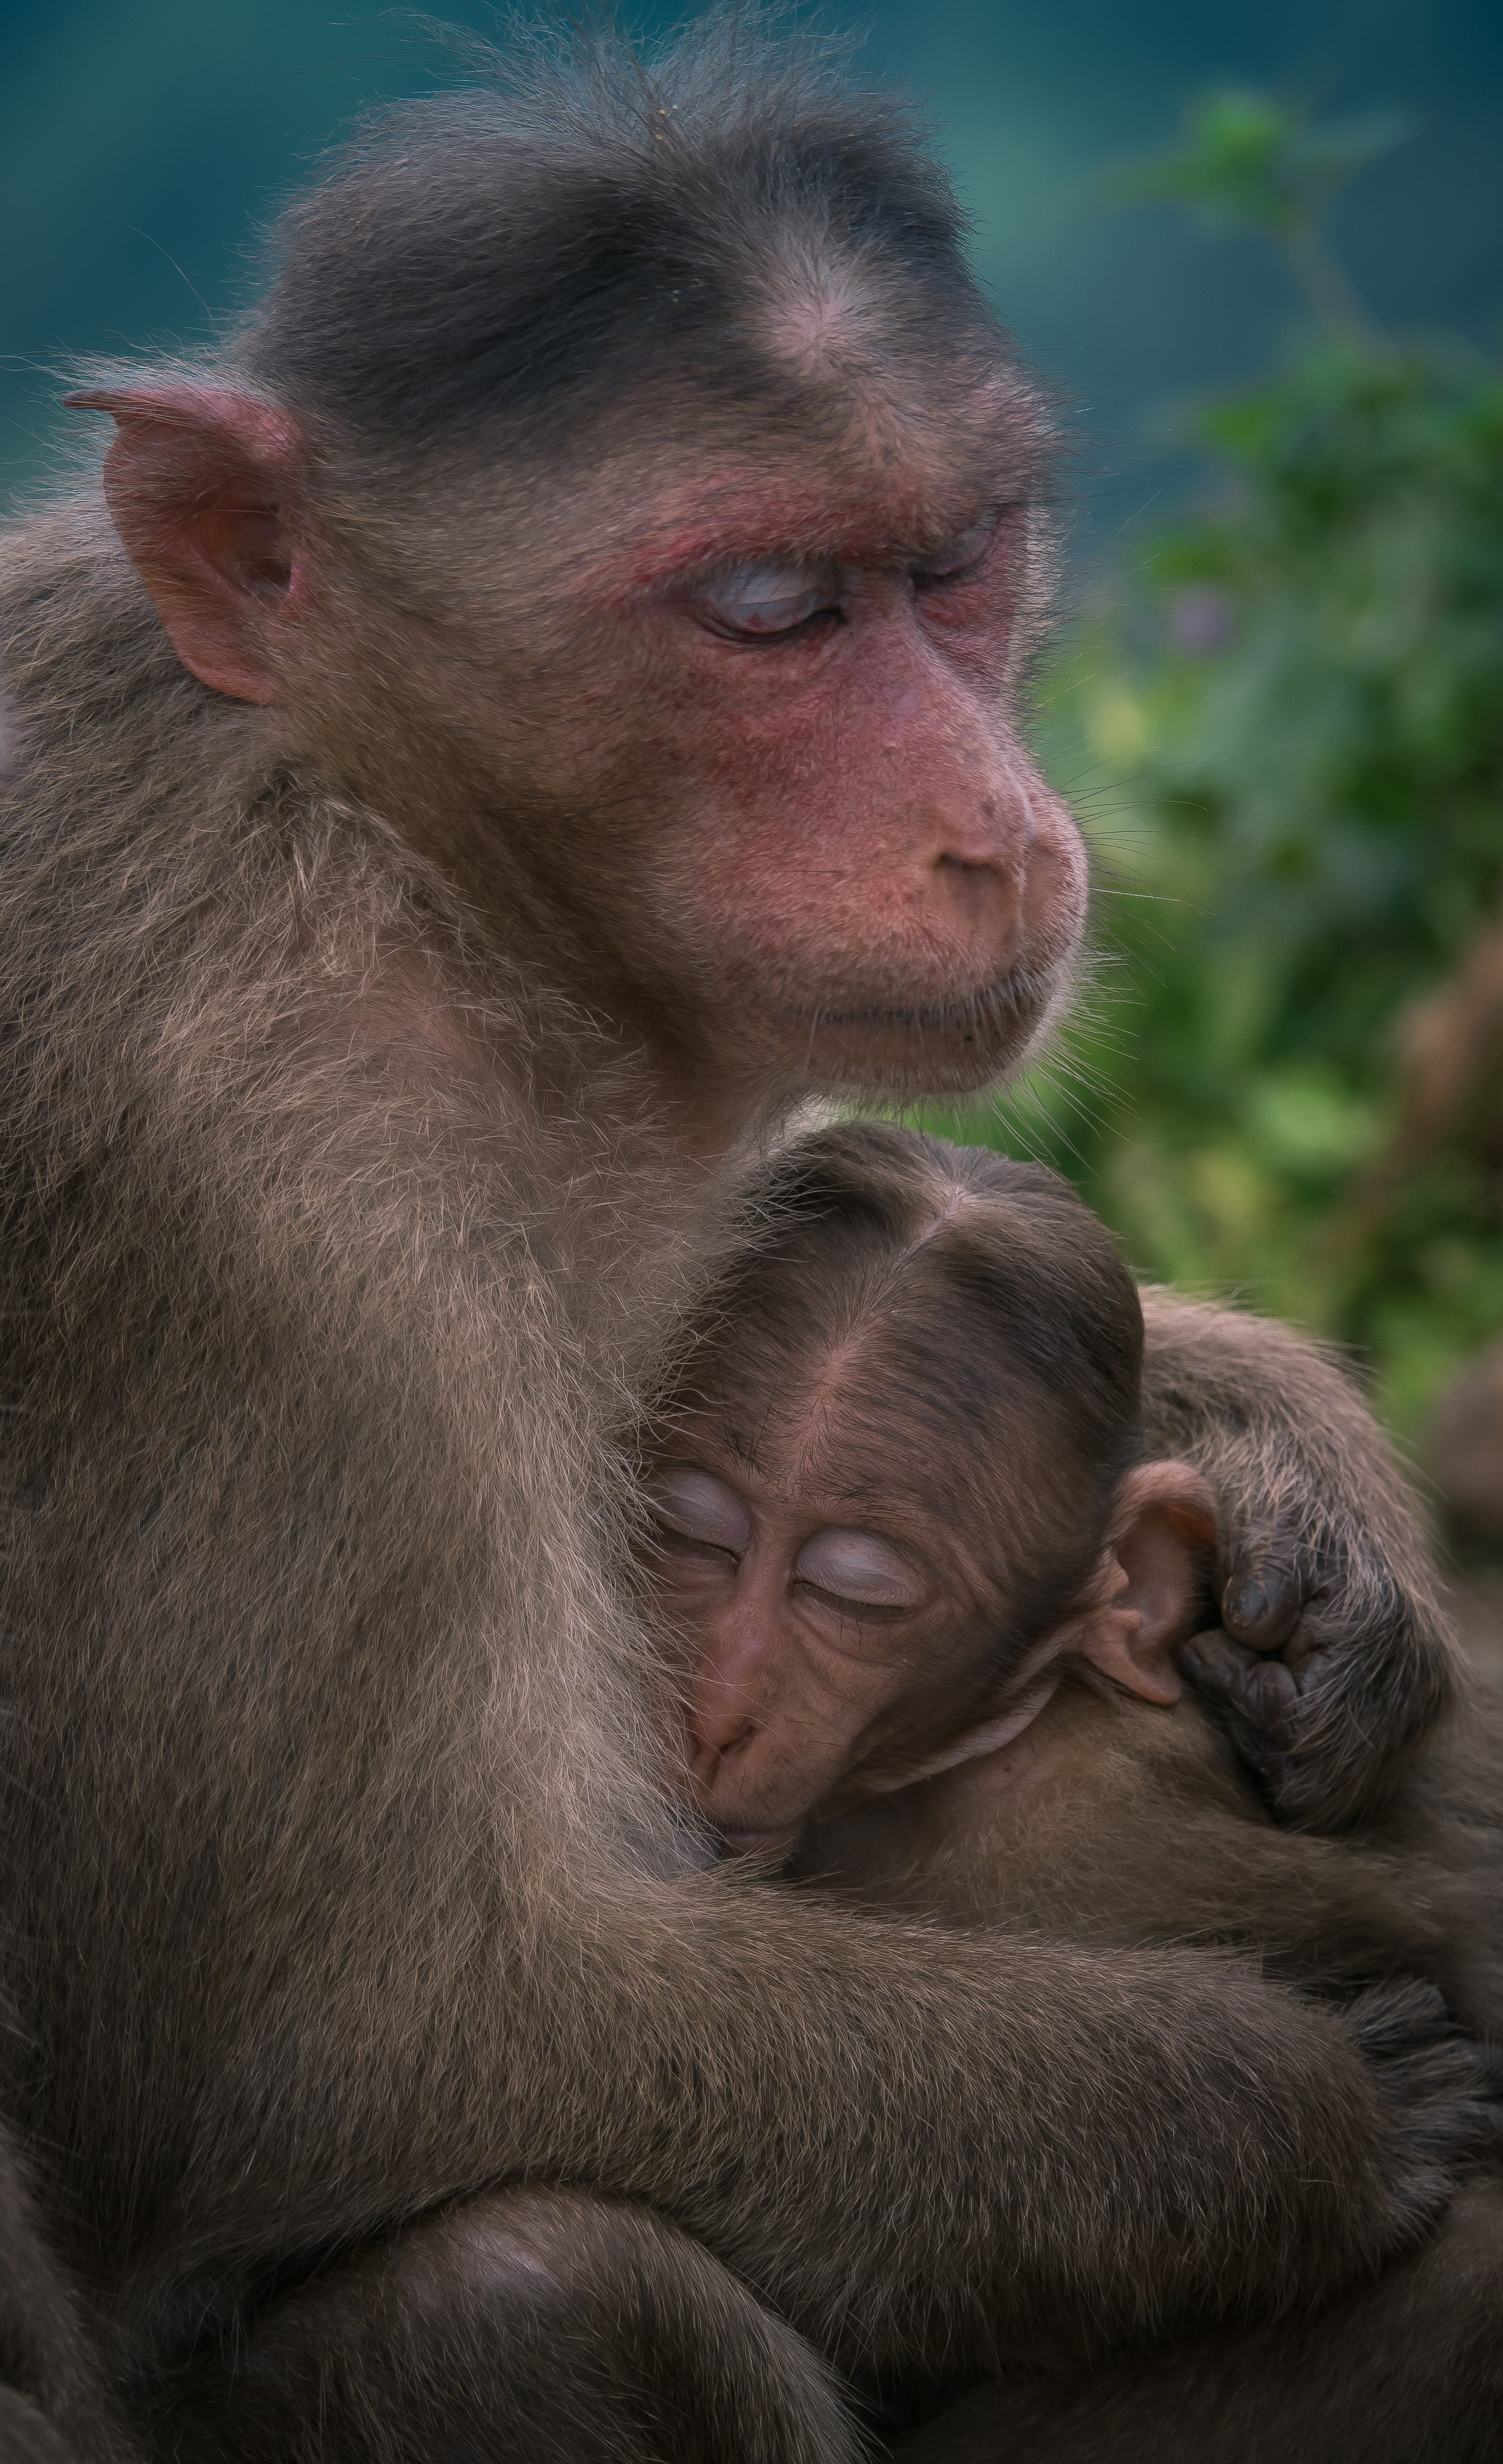 Heath Cajandig Captures Monkeys in India Embracing